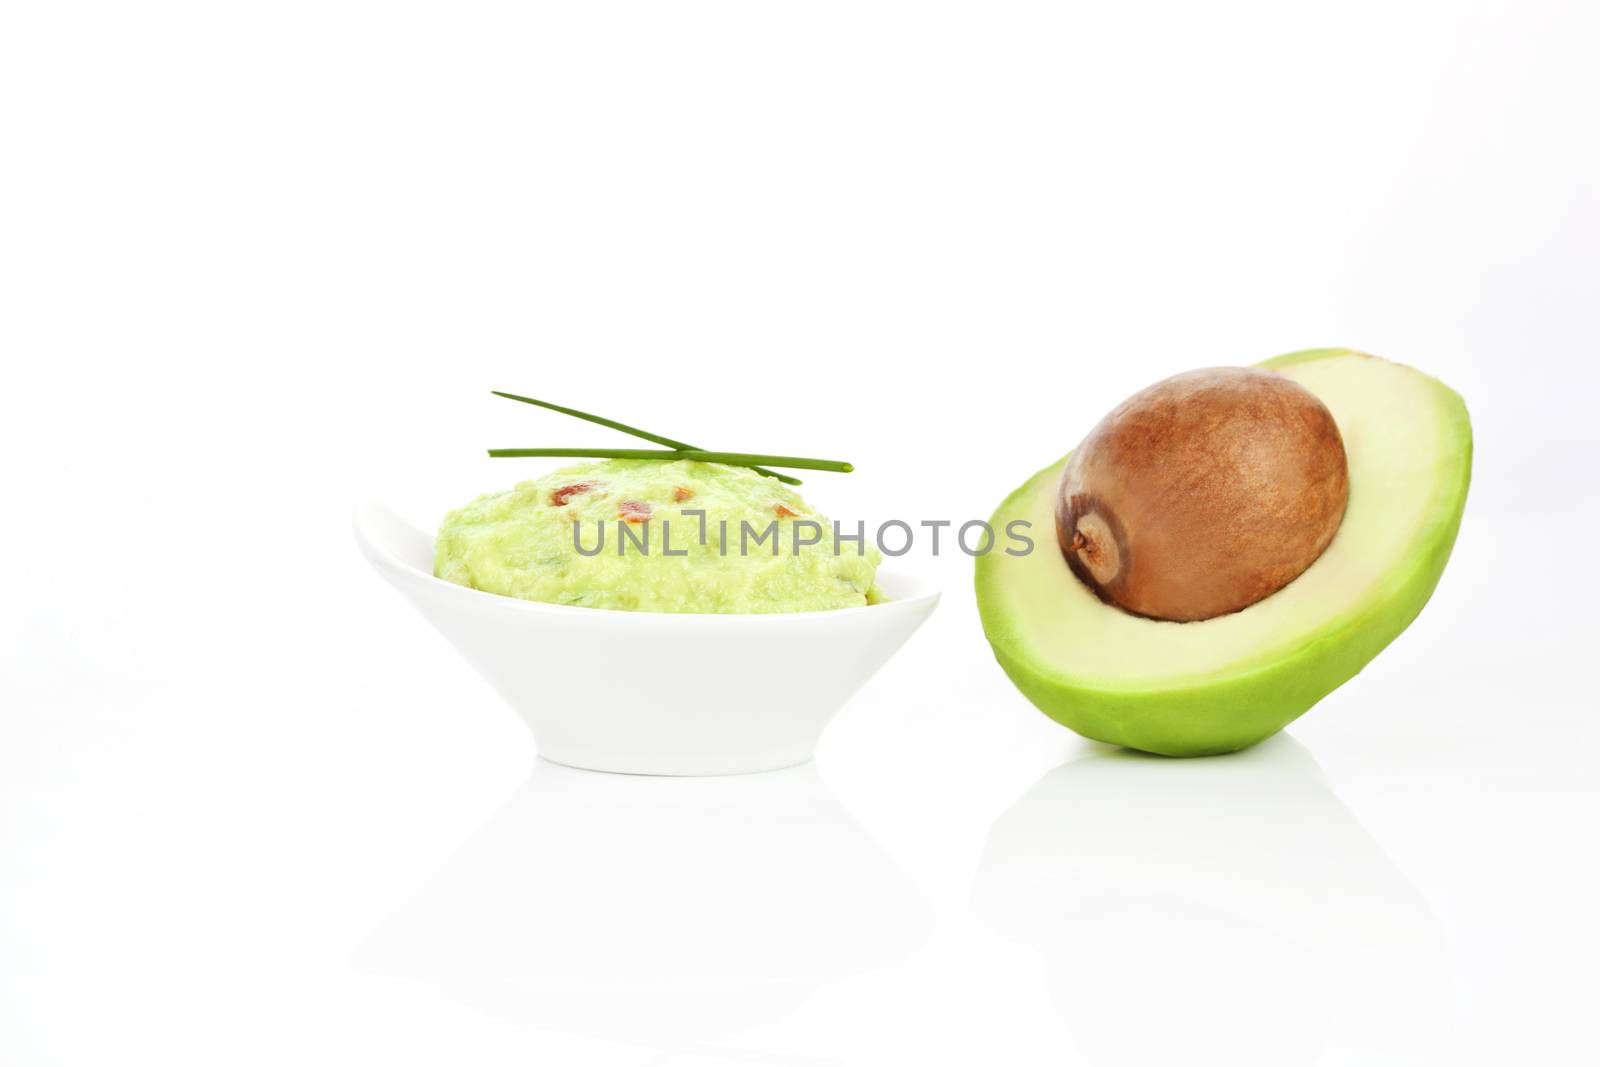 Avocado dip guacamole and fresh avocado half isolated on white background.